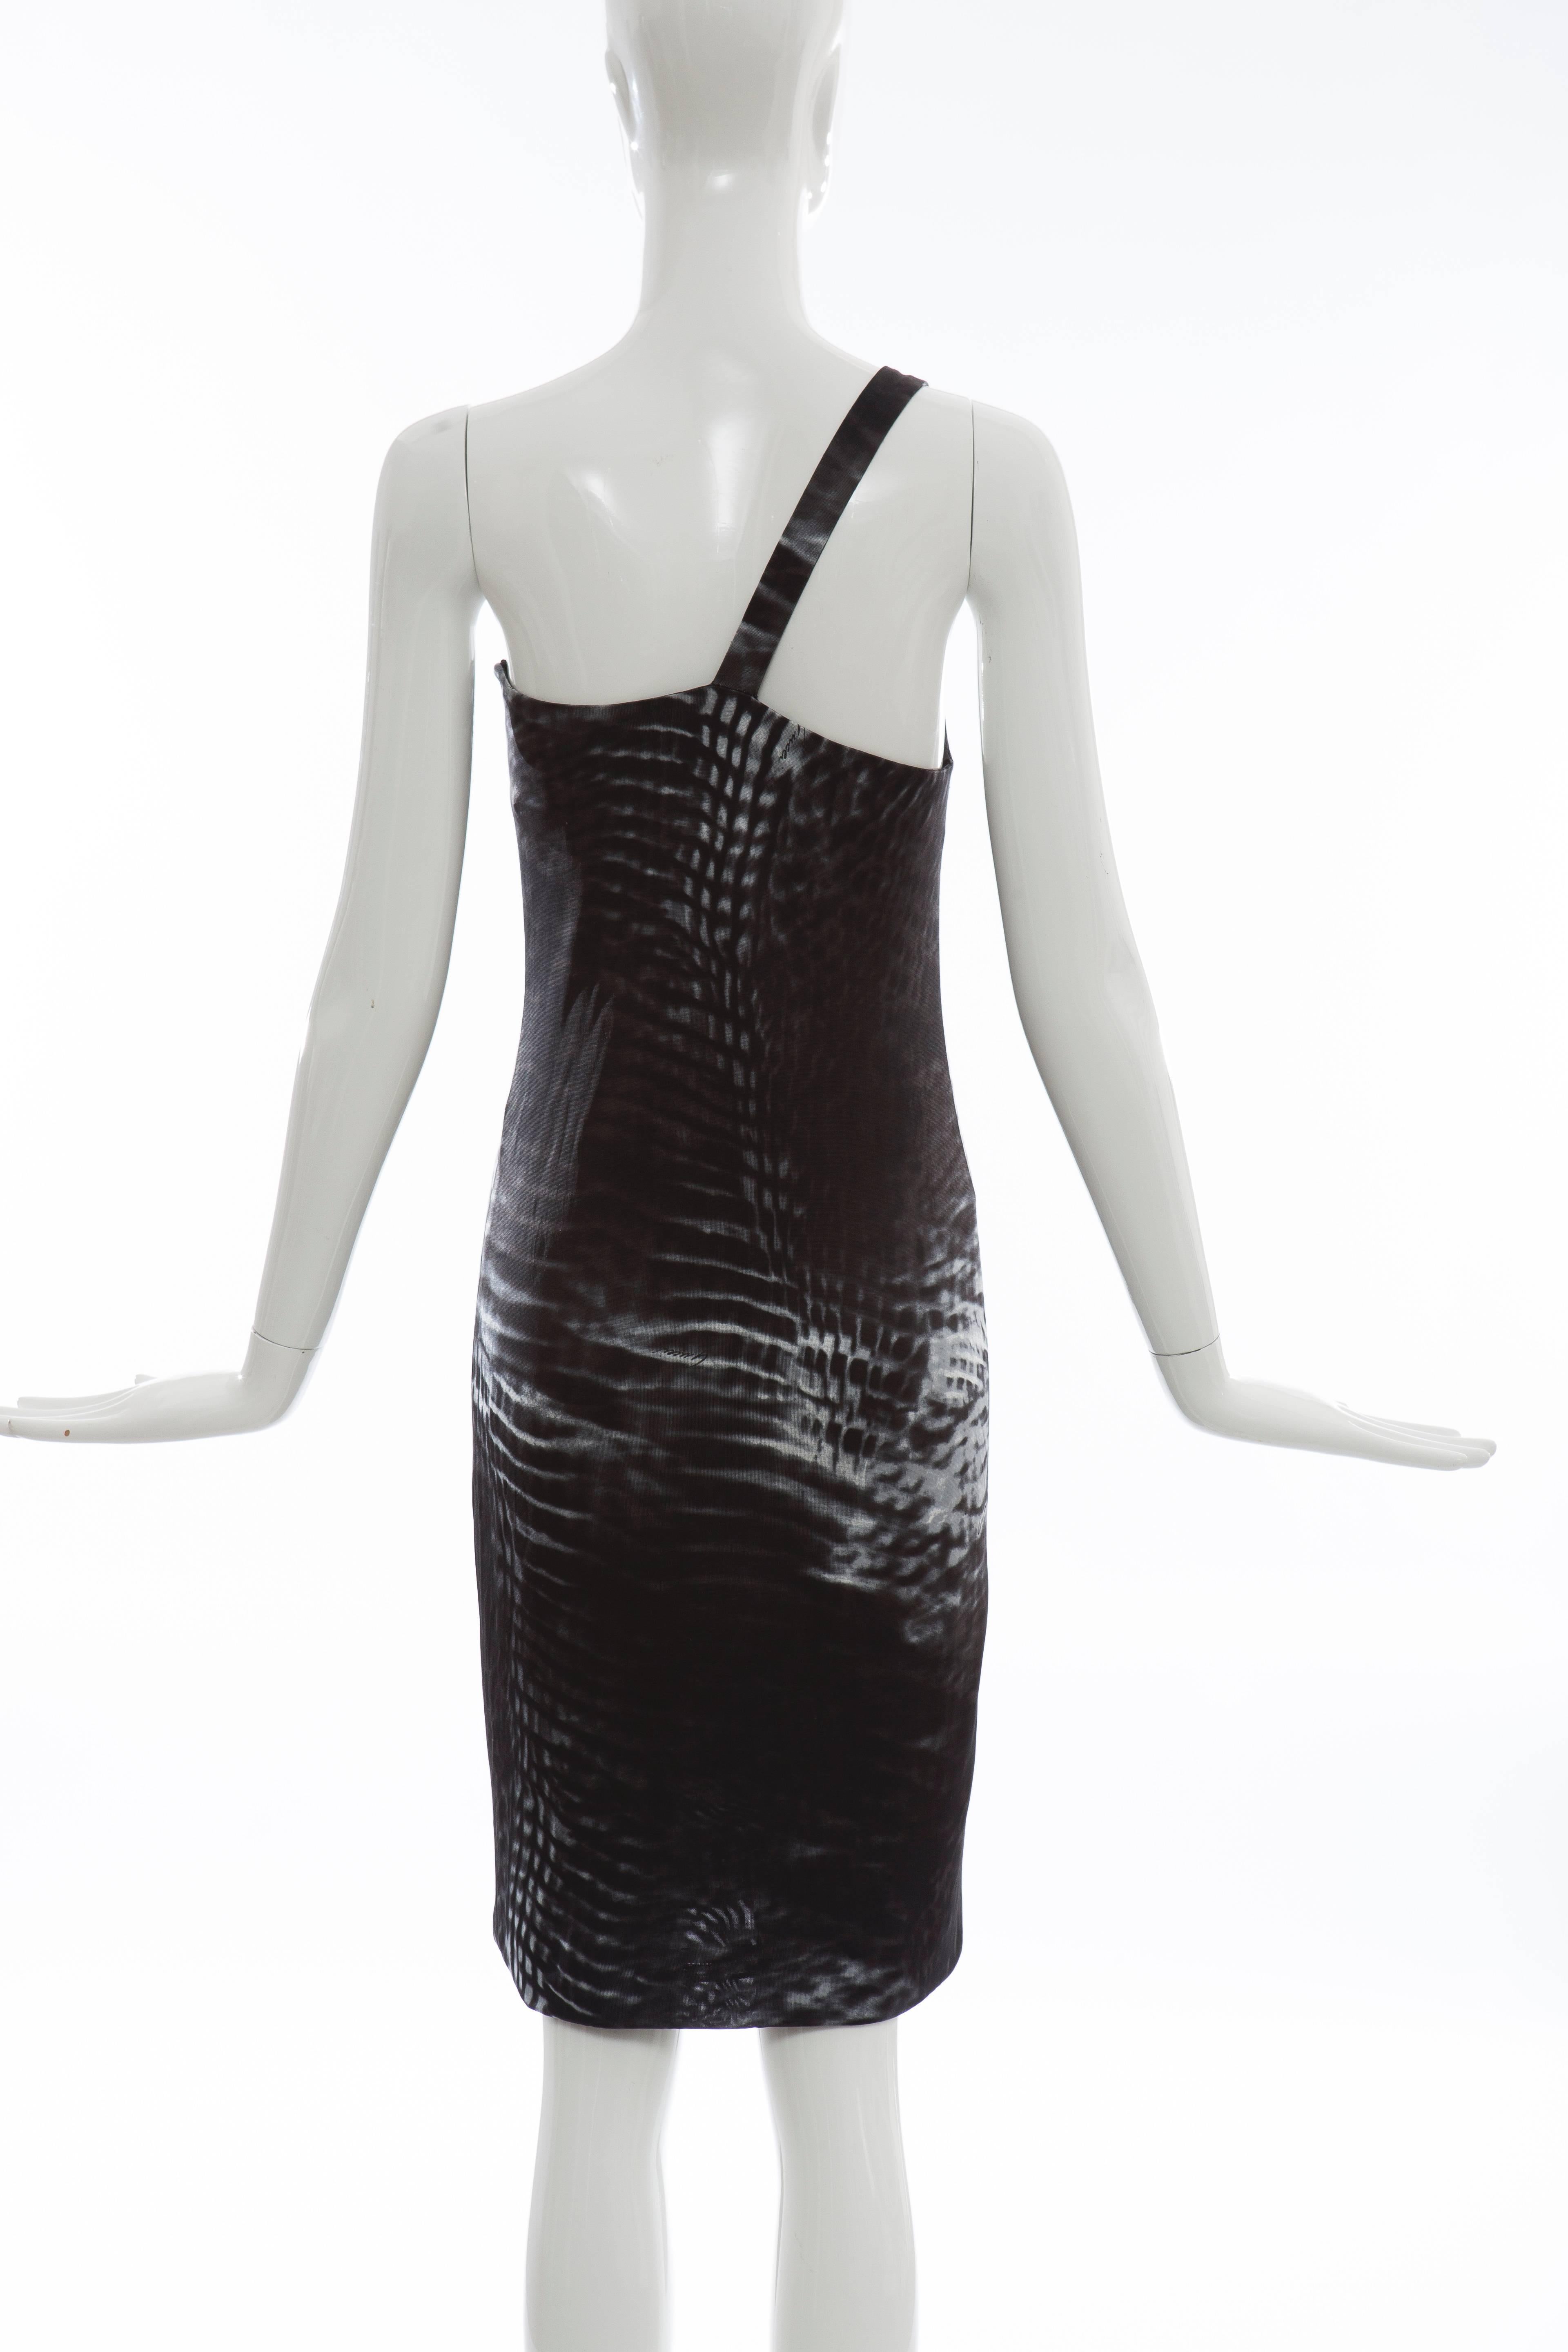 Women's Tom Ford for Gucci Runway Black One-Shoulder Printed Dress , Spring 2000 For Sale